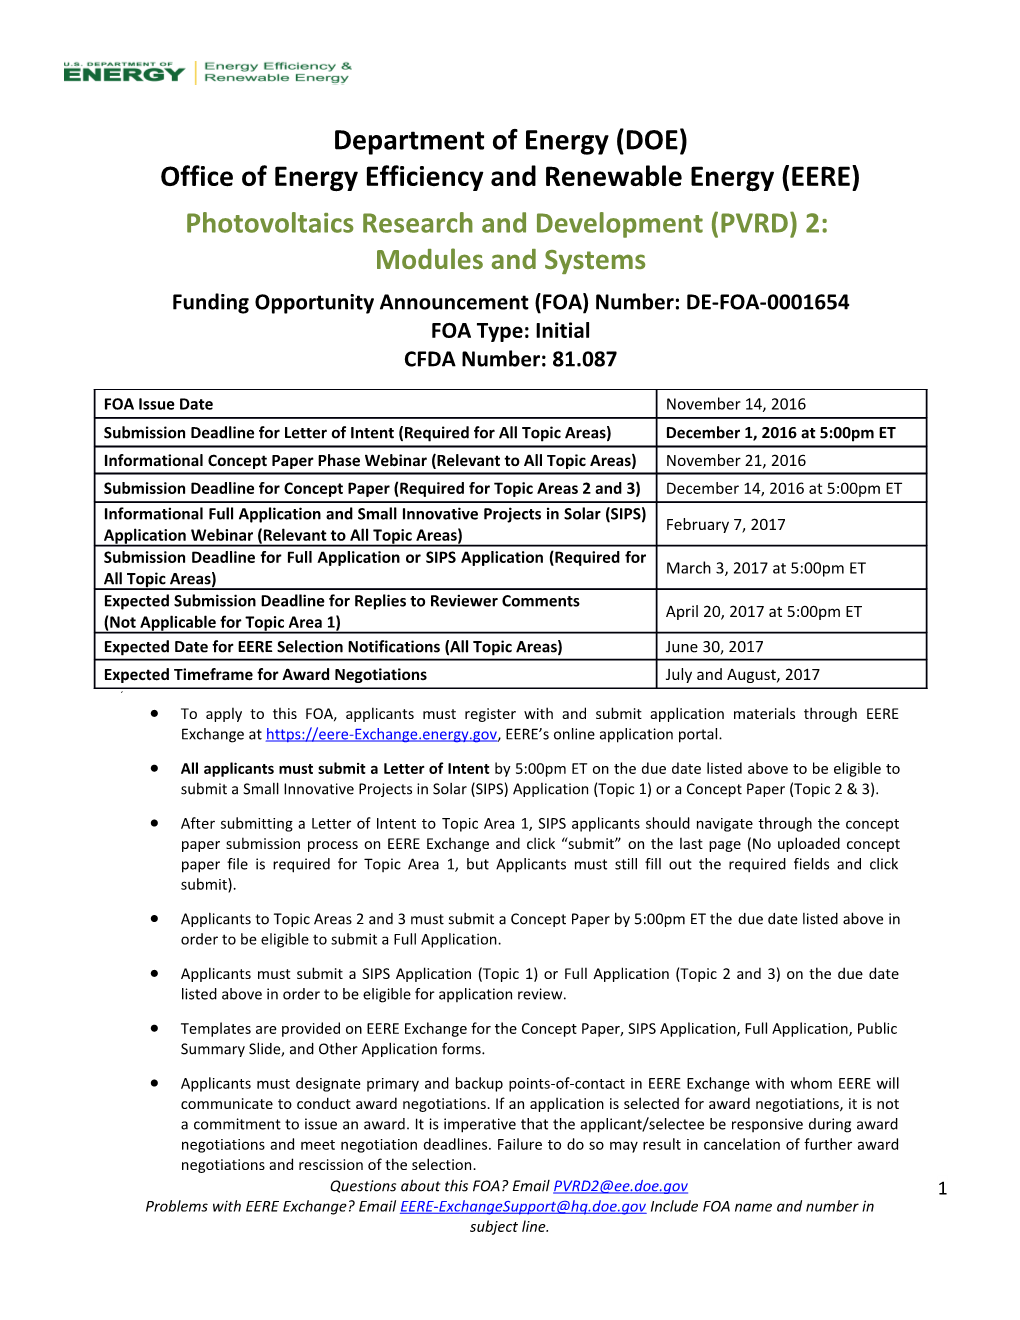 Office of Energy Efficiency and Renewable Energy (EERE)